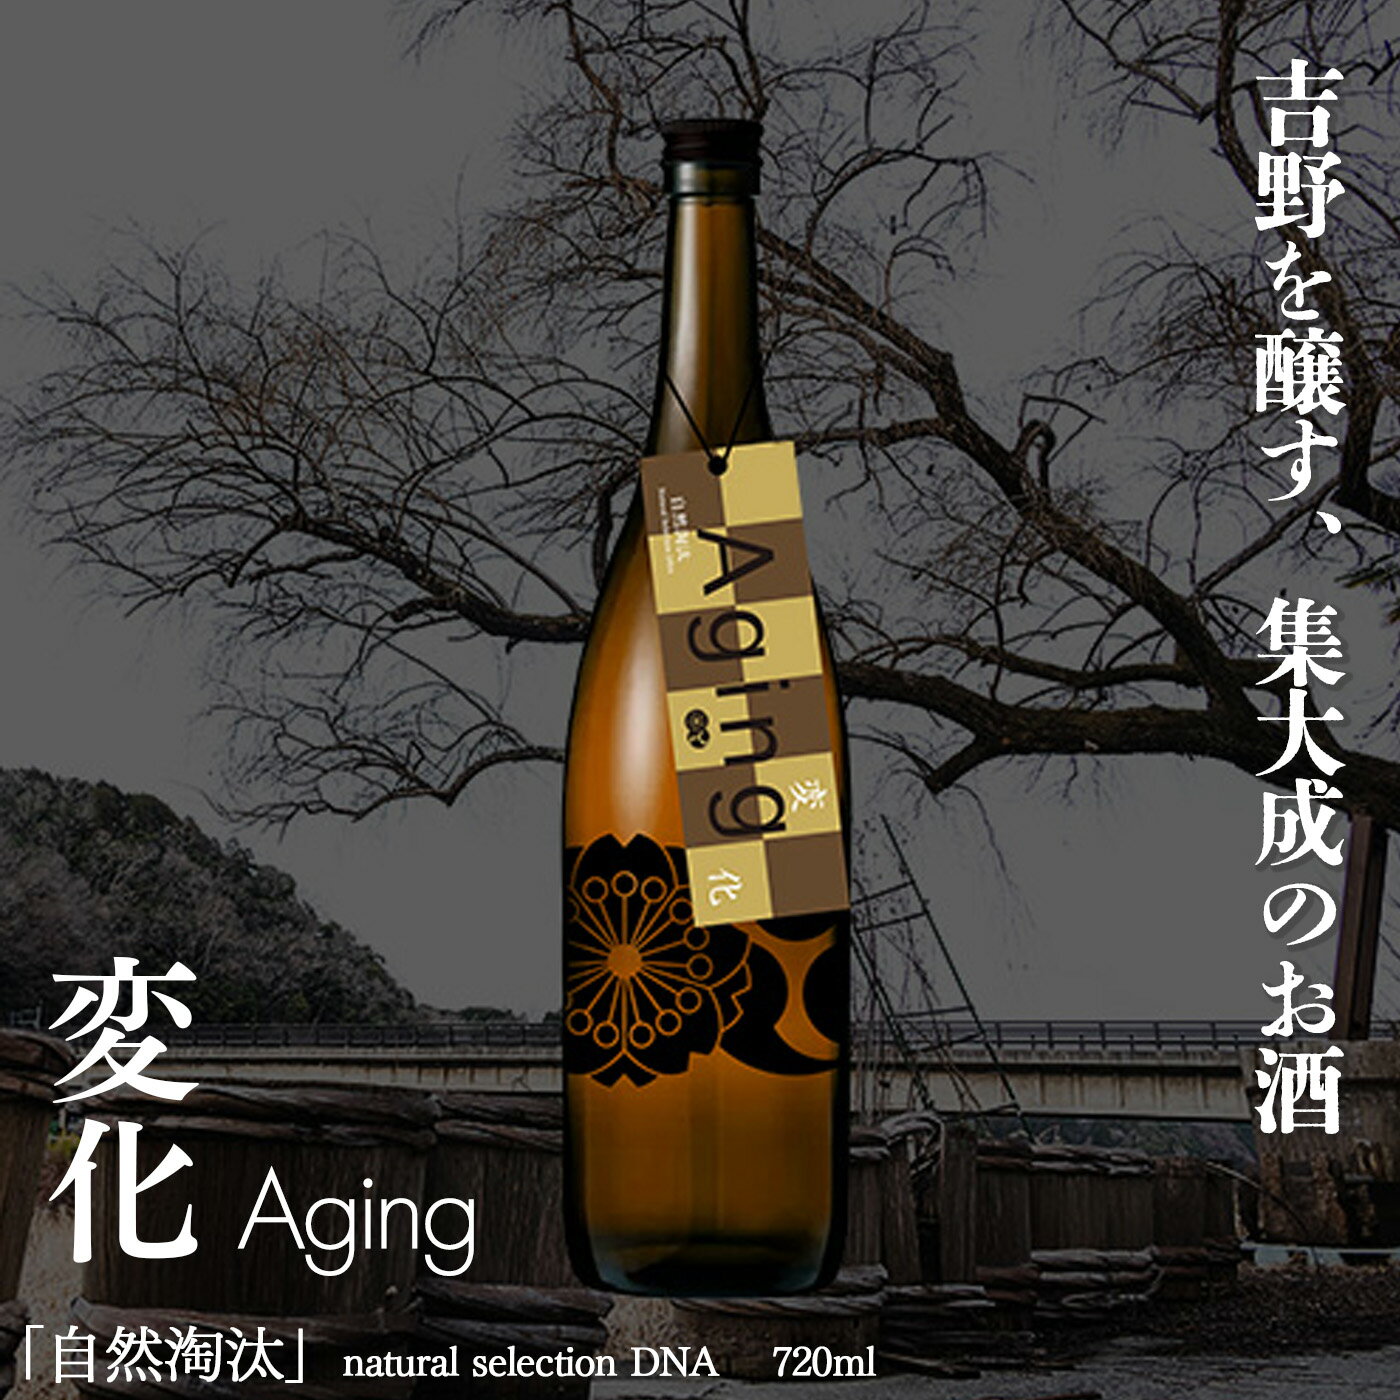 自然淘汰 natural selection DNA Aging "変化" 日本酒 酒 美吉野酒造 奈良県 吉野町